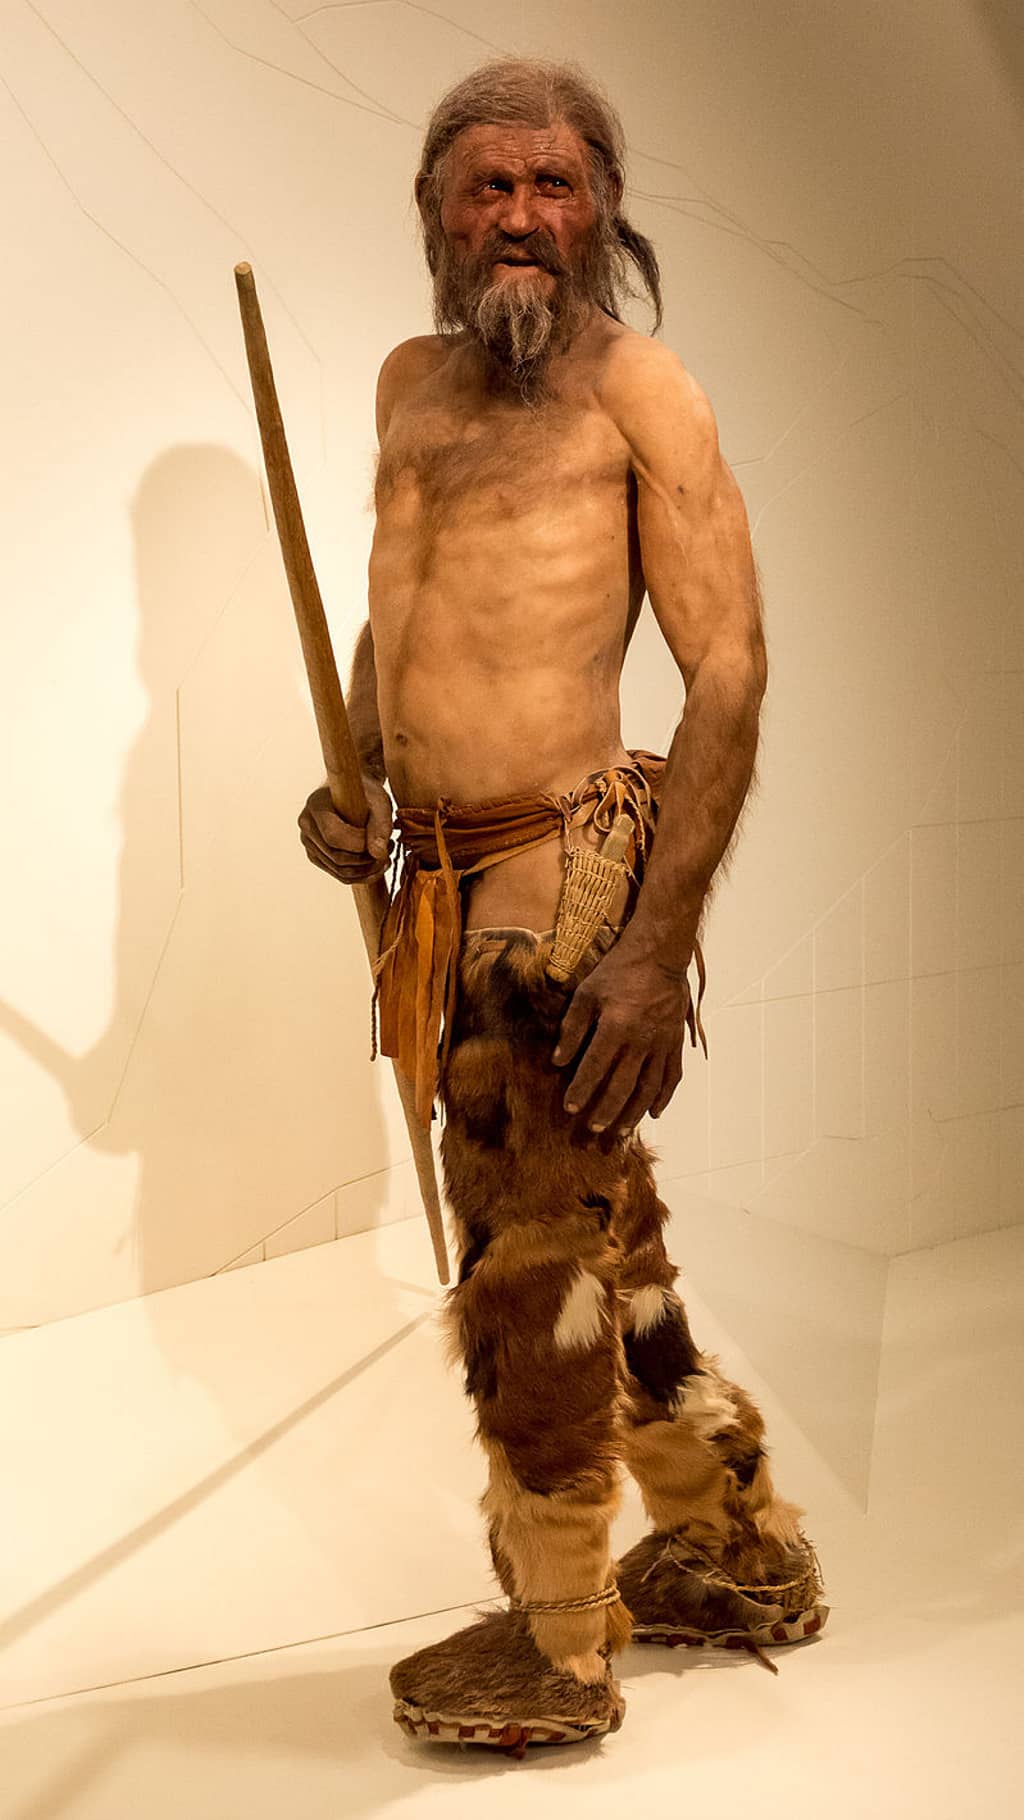 Descubren que el hombre de Ötzi estaba a punto de sufrir un infarto